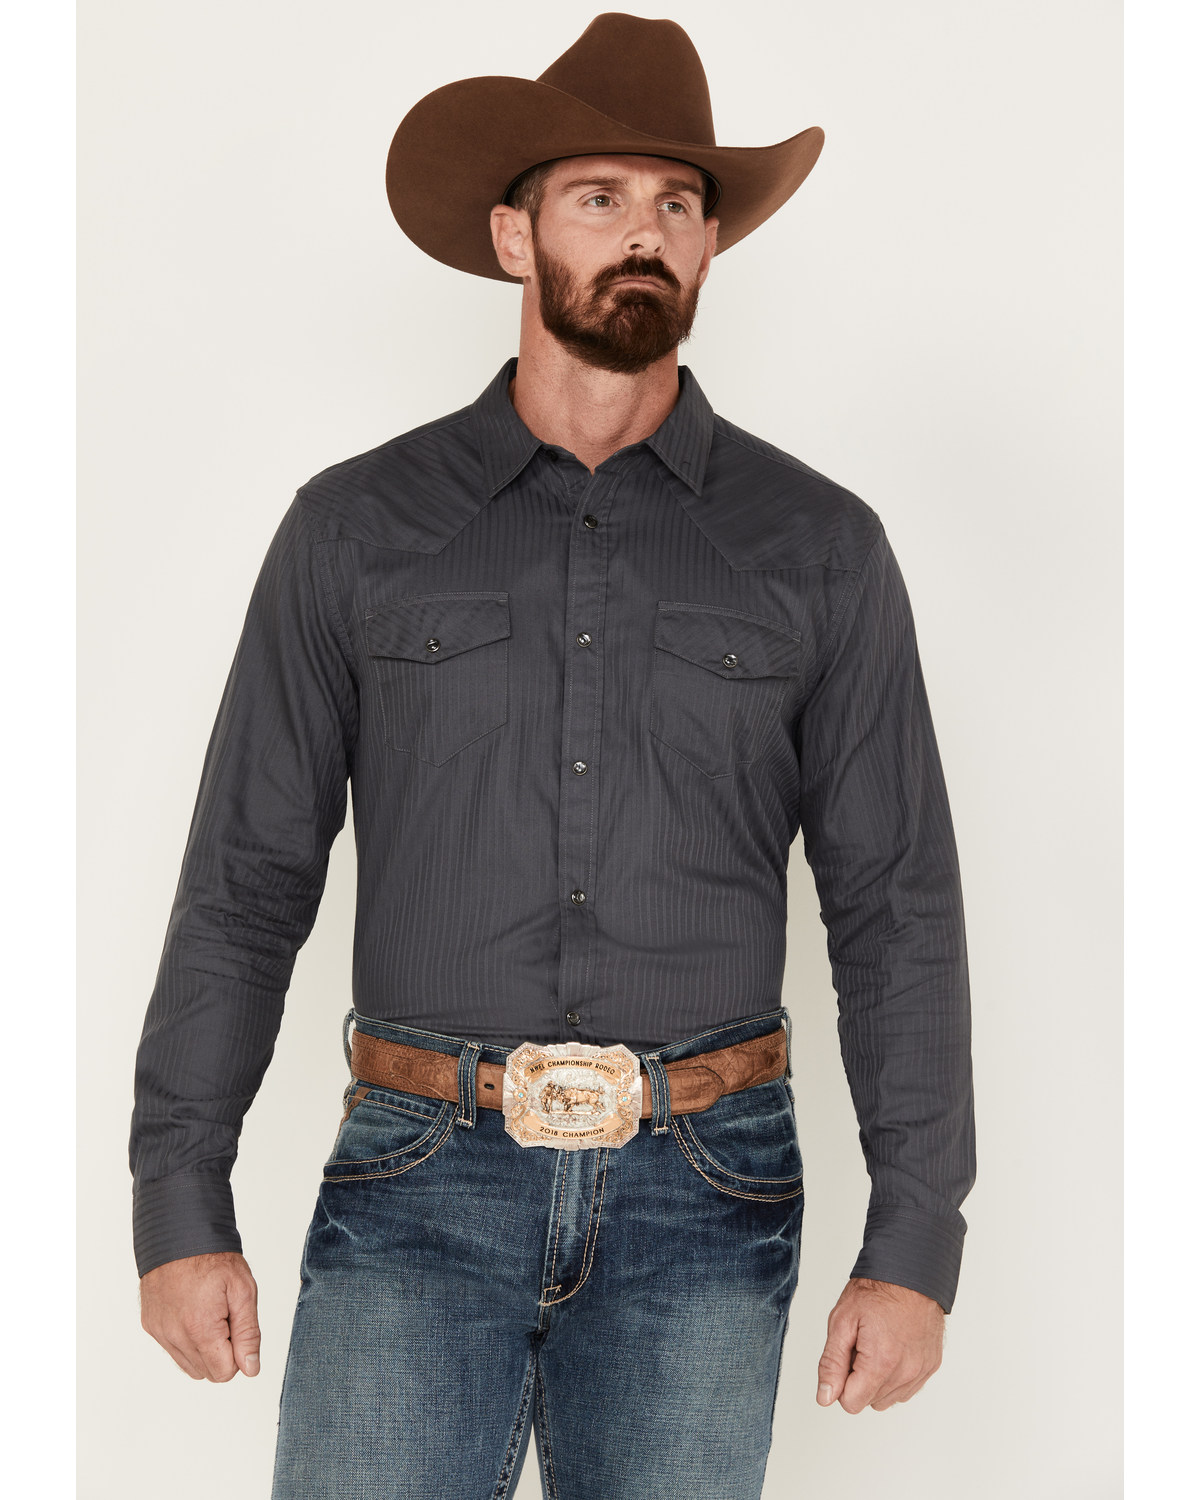 Gibson Trading Co Men's Southside Satin Stripe Snap Western Shirt